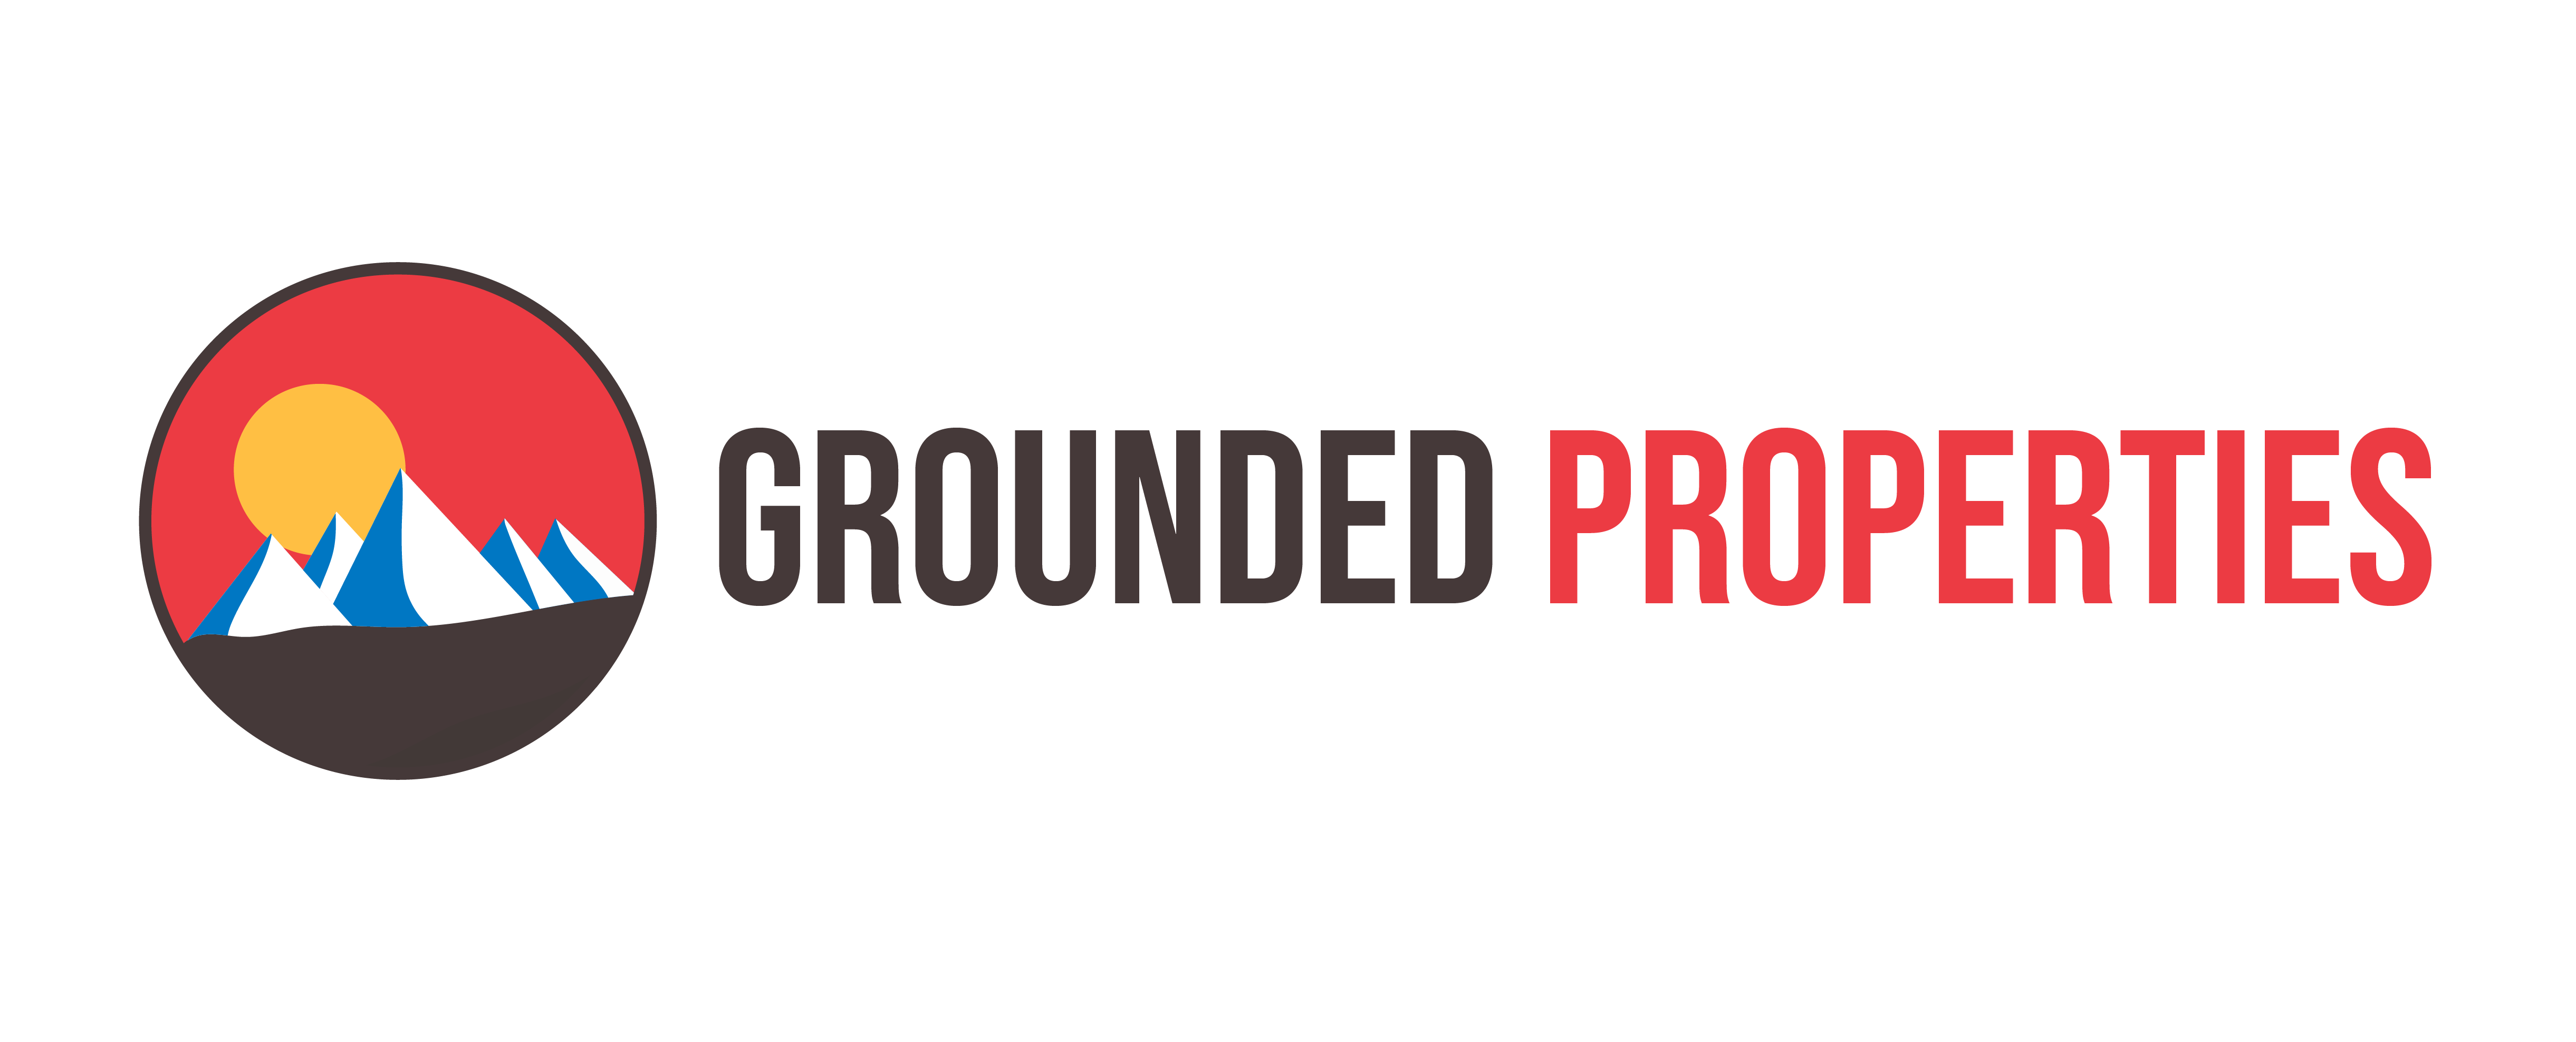 Grounded Properties Land logo